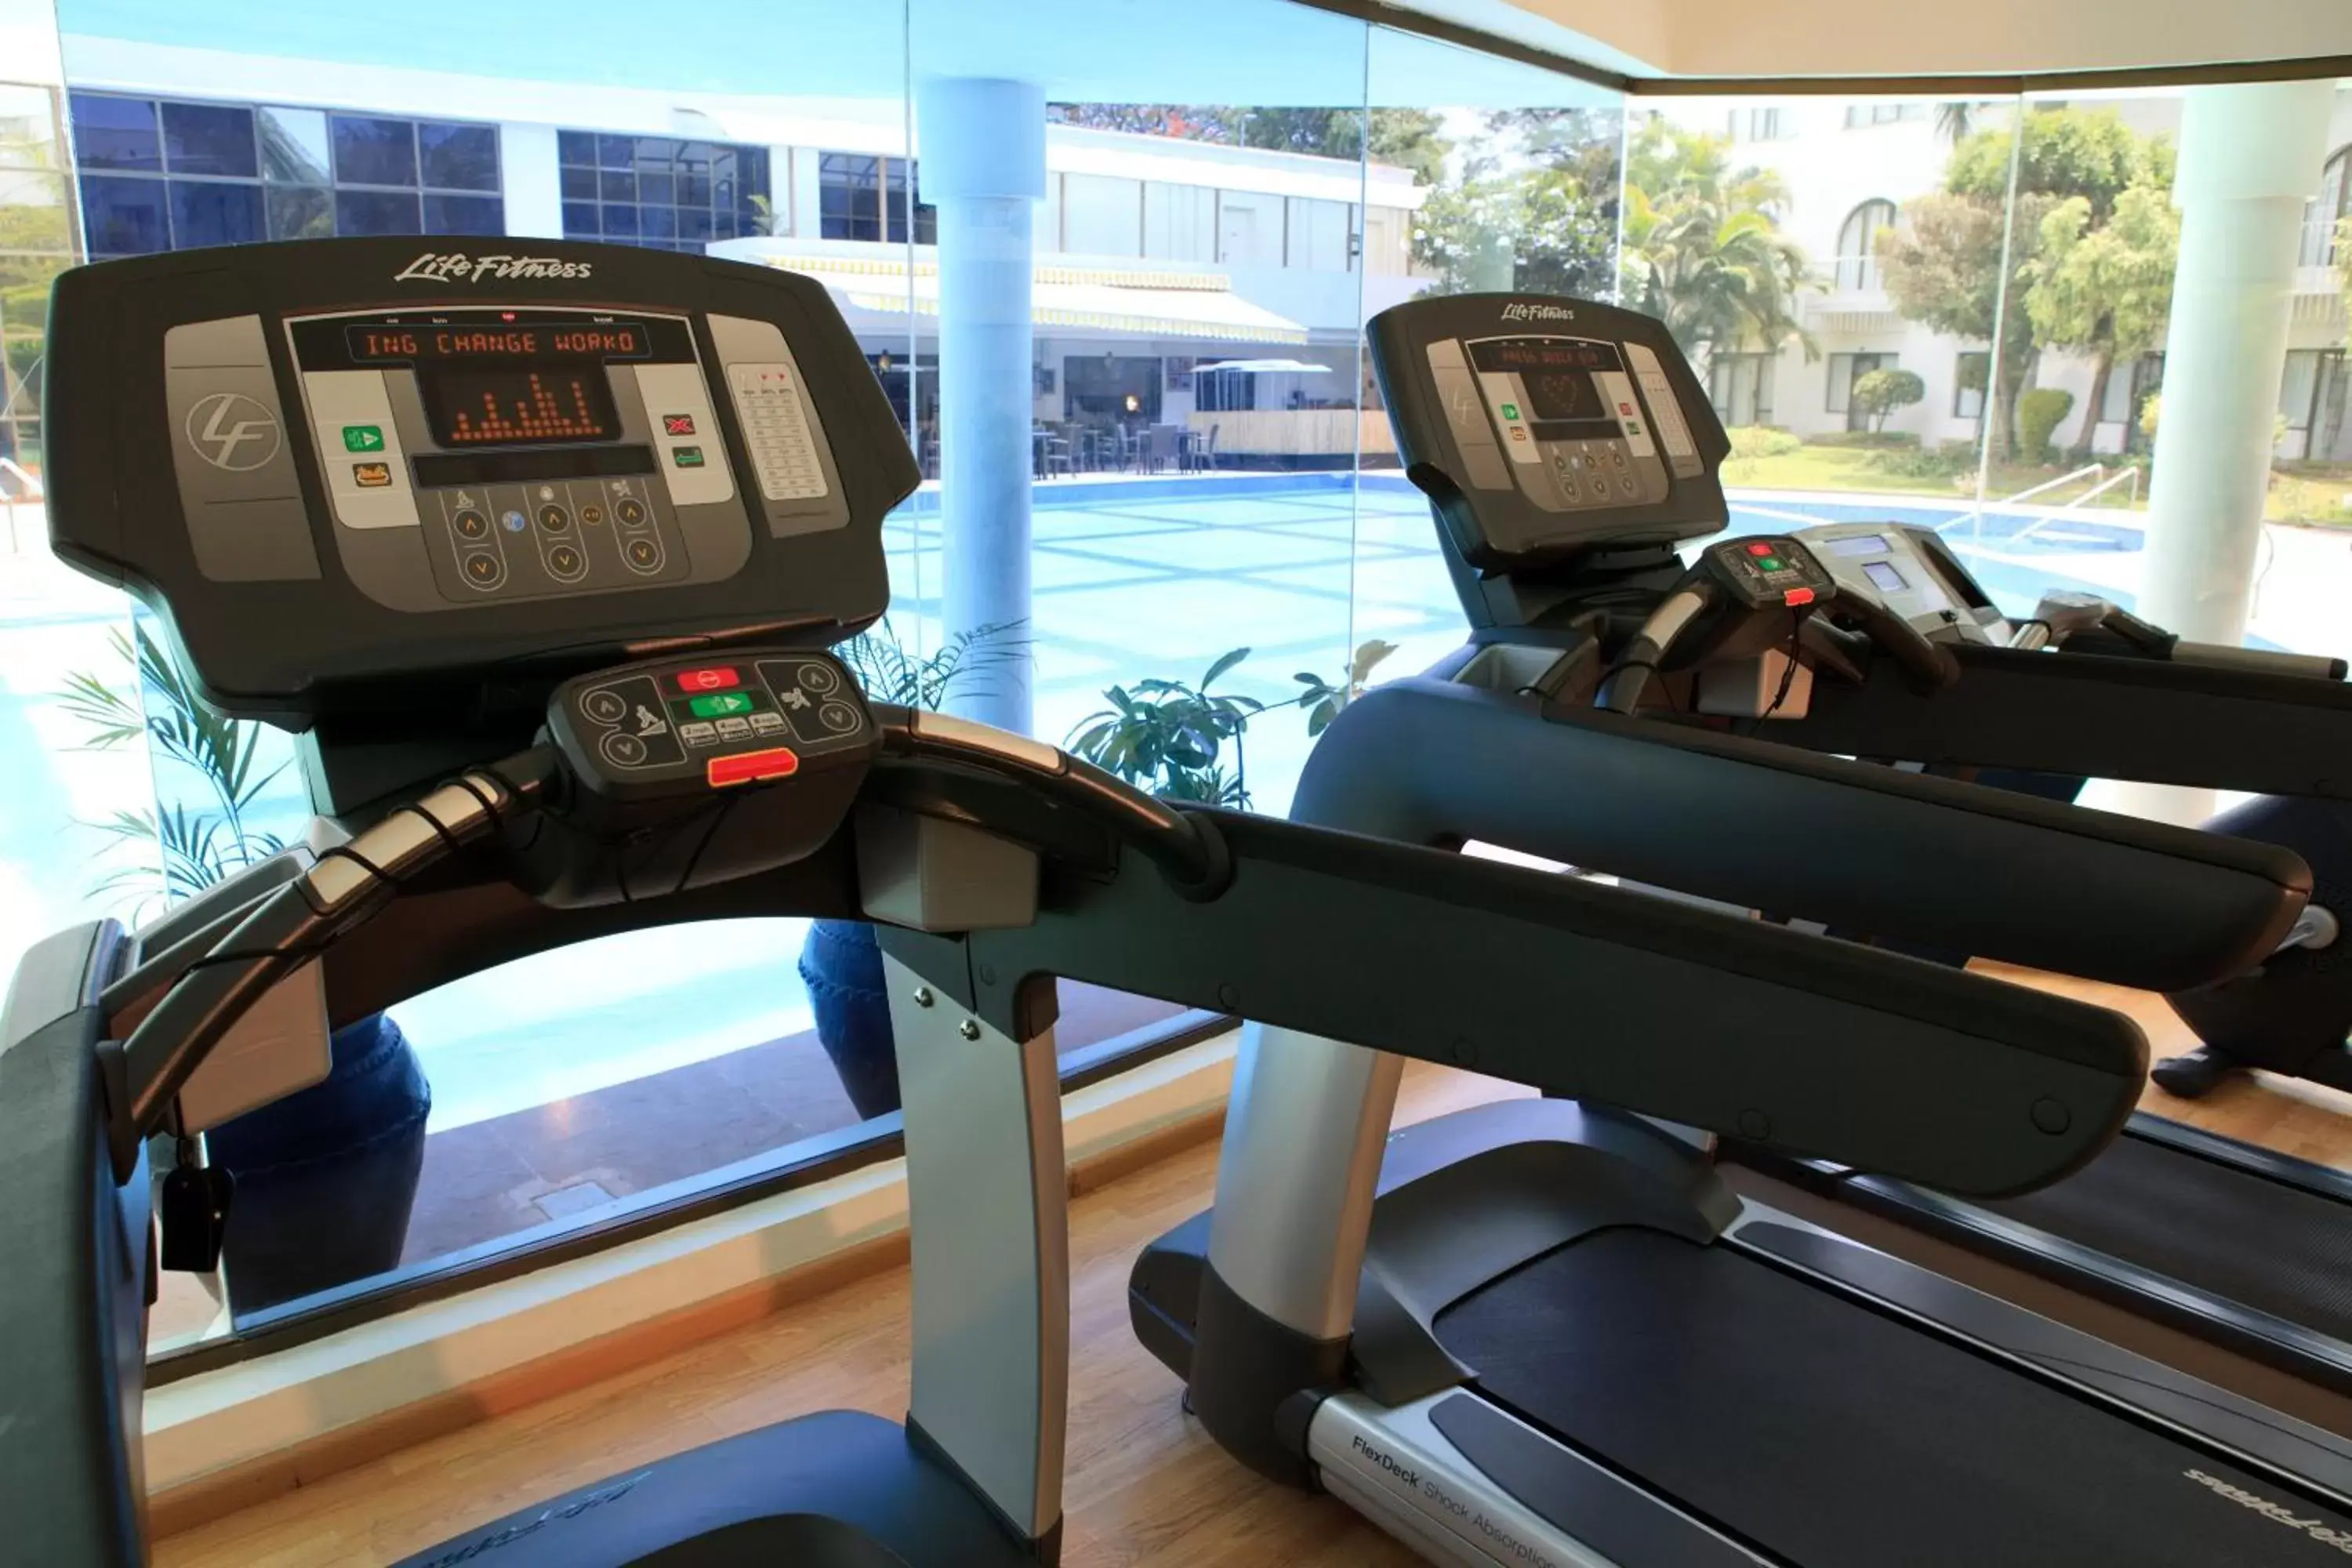 Fitness centre/facilities, Fitness Center/Facilities in Lemon Tree Hotel, Aurangabad